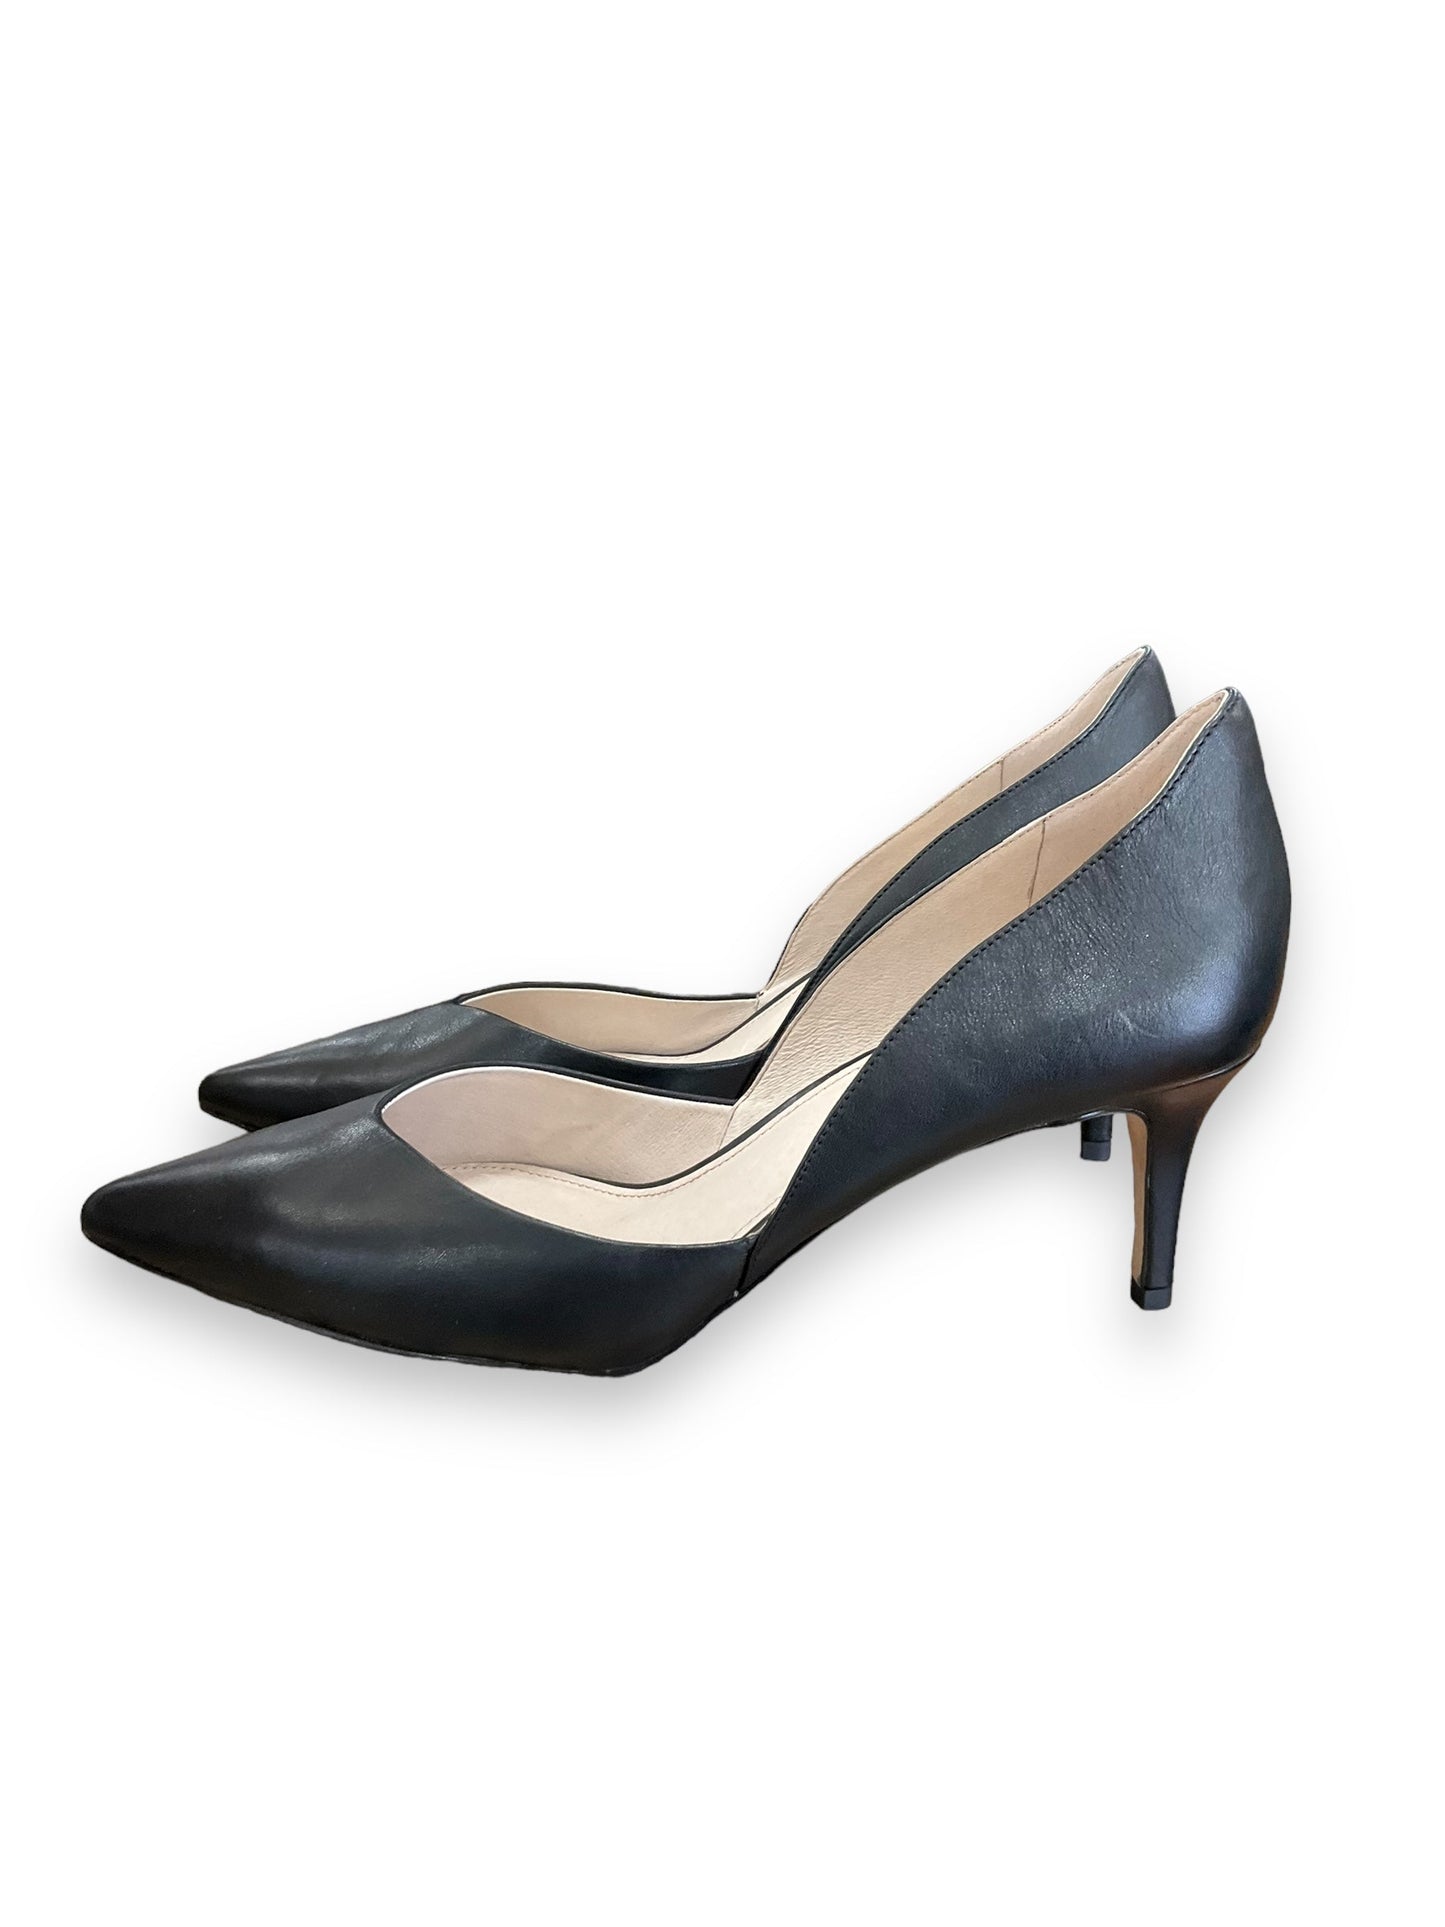 Shoes Heels Stiletto By Louise Et Cie  Size: 10